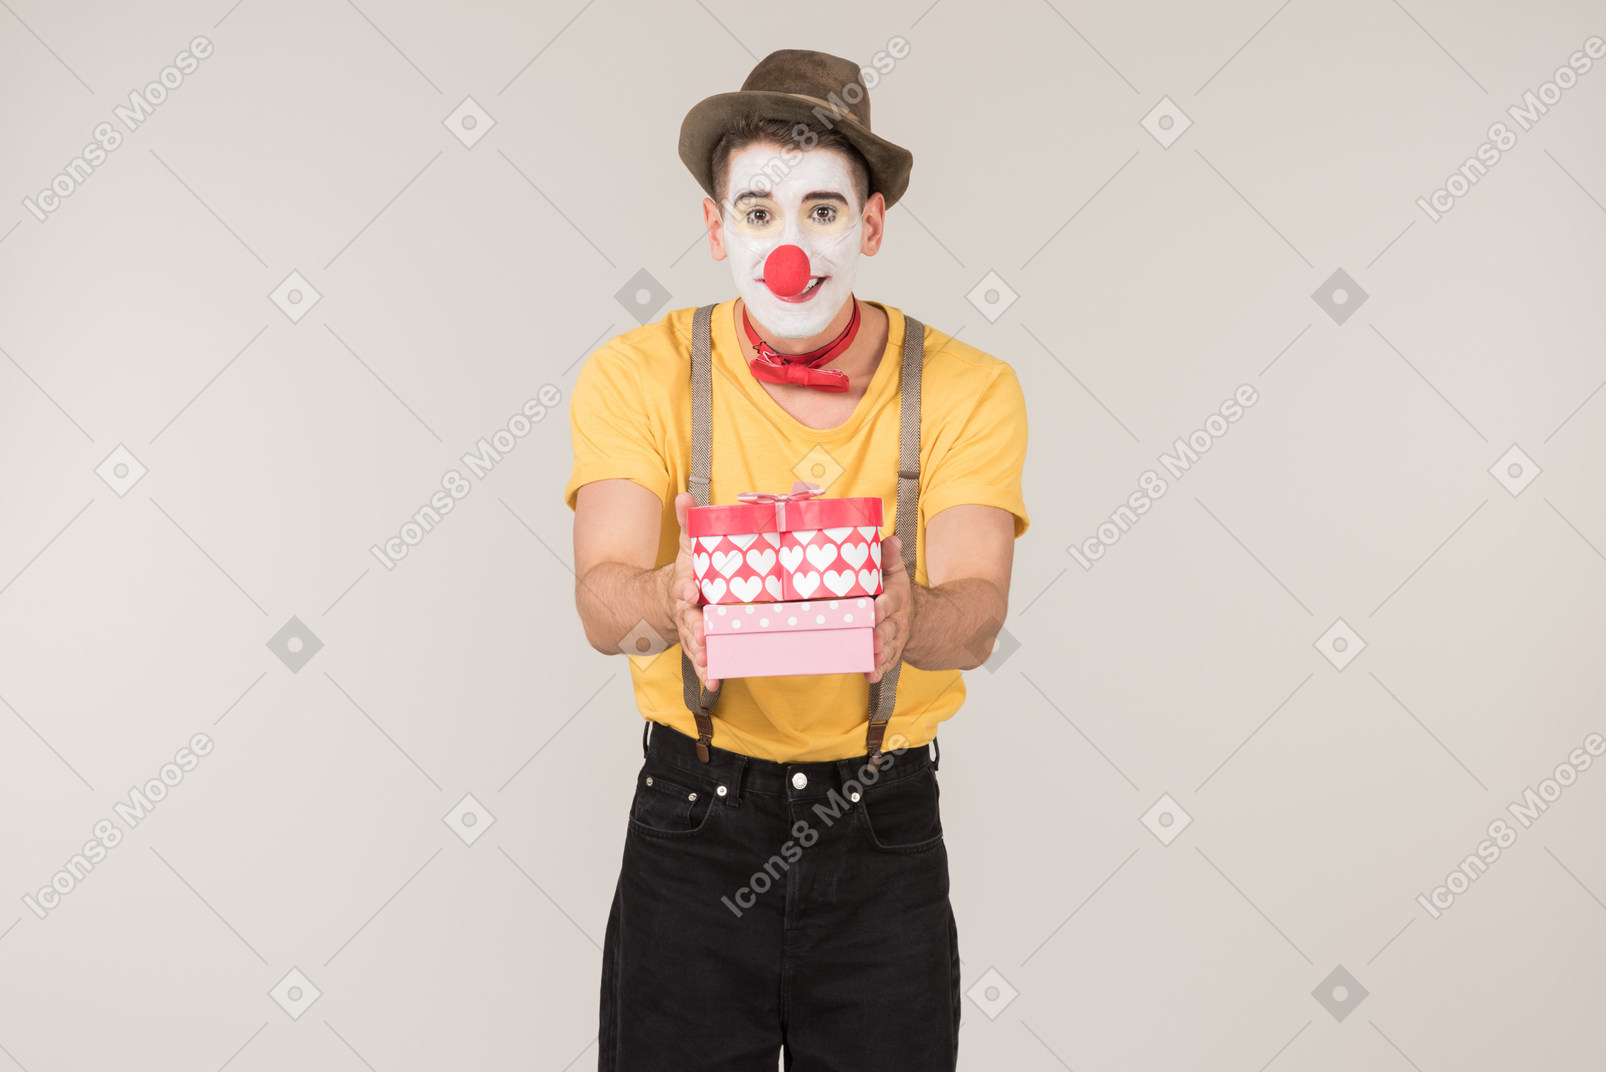 Male clown holding gift box